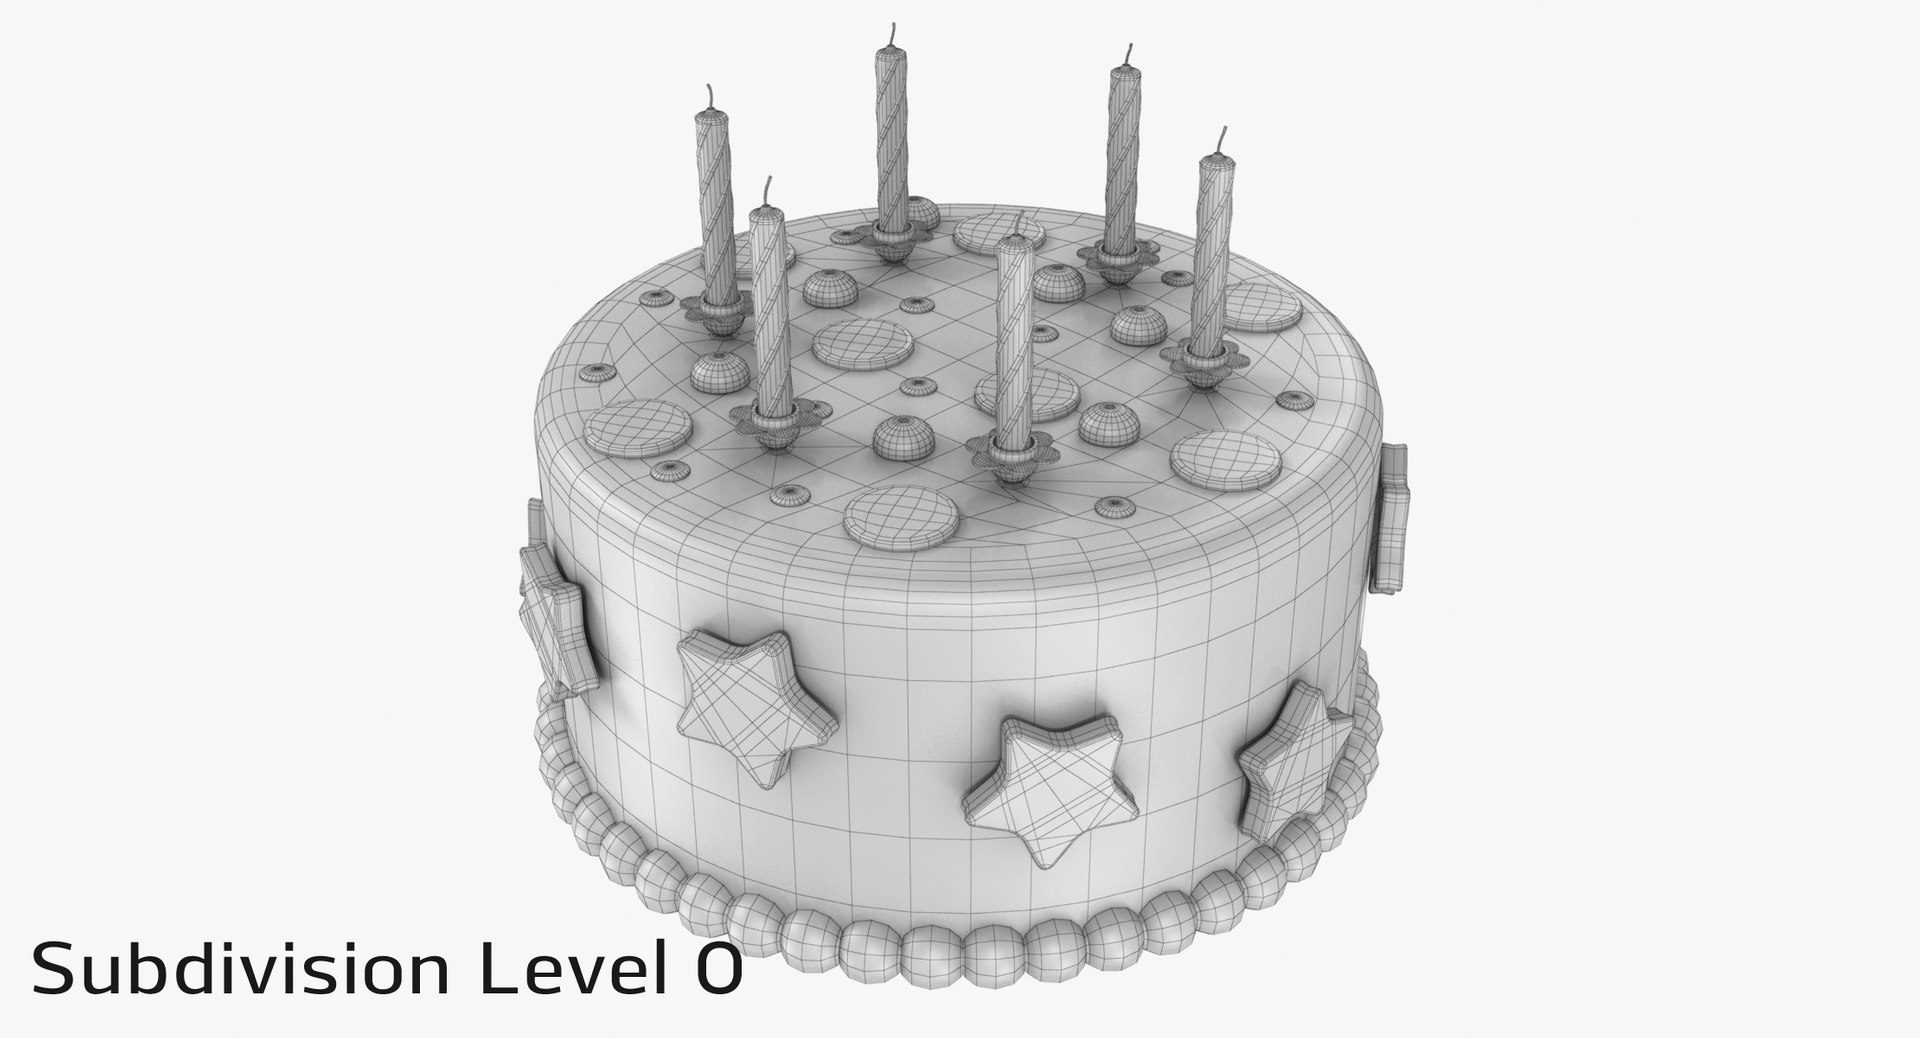 3d Birthday Cake Candles Model Turbosquid 1335229 